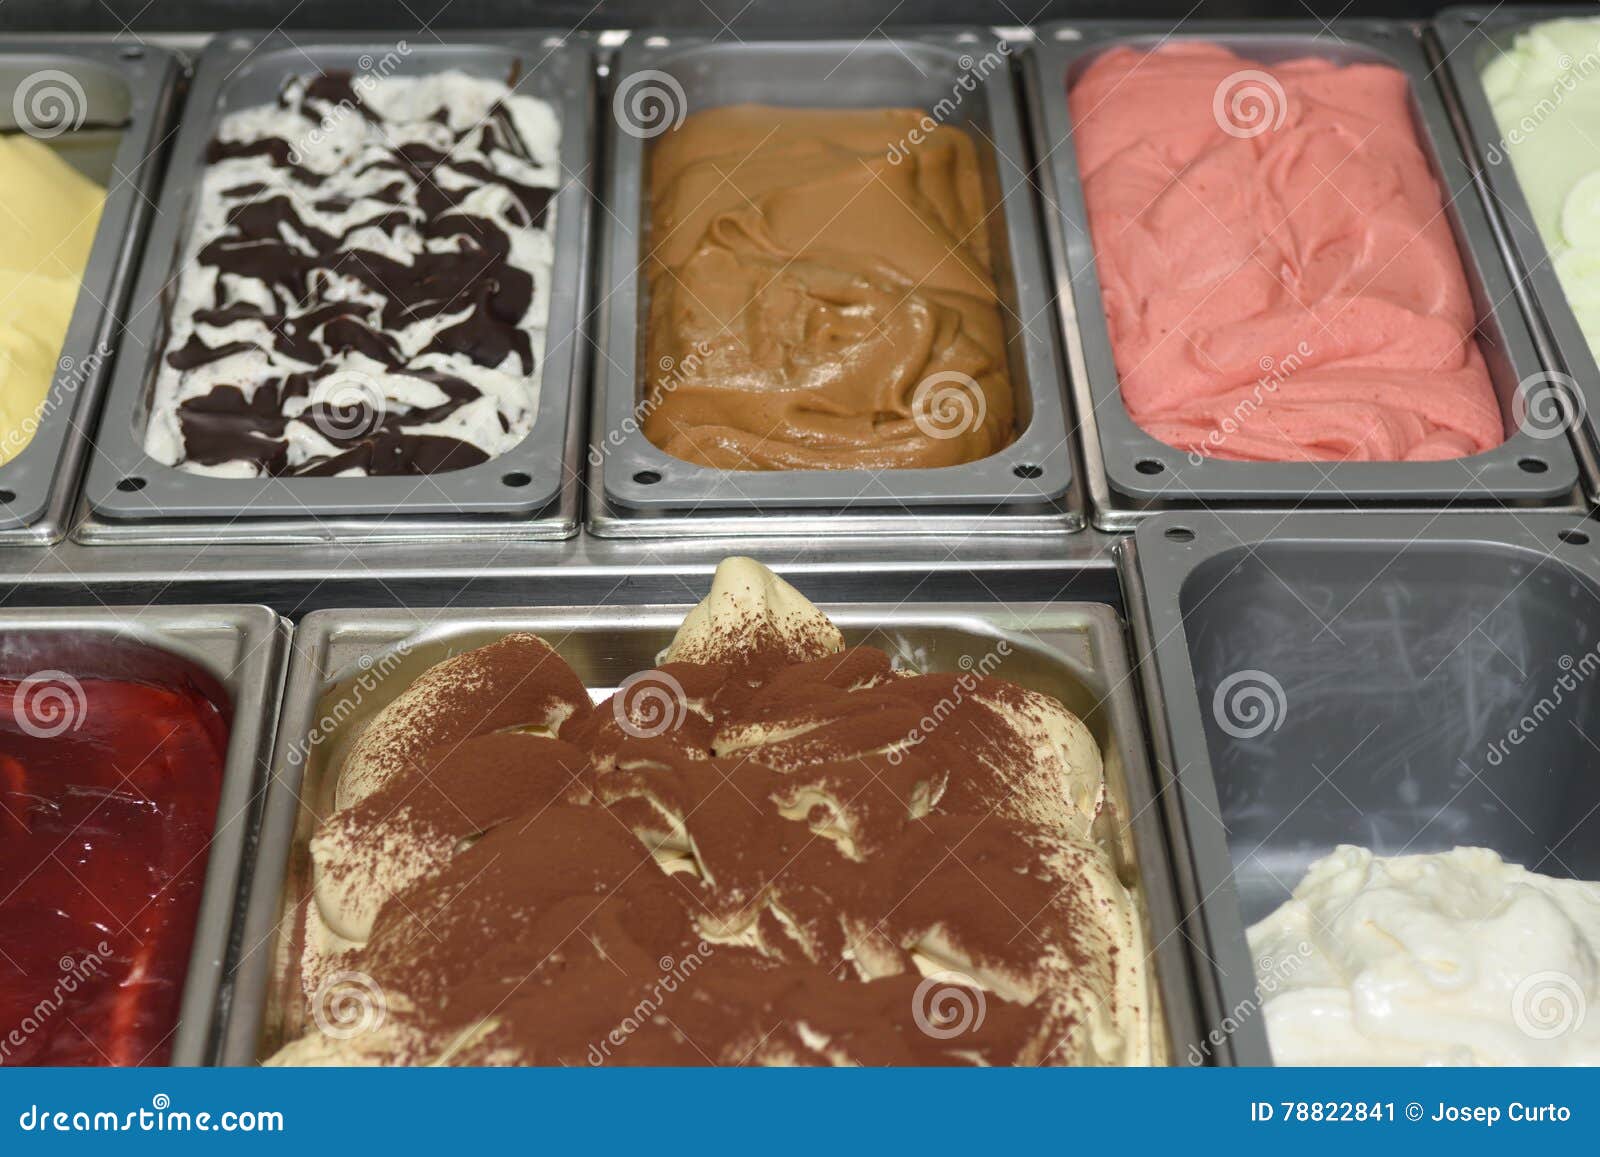 ice cream shop,